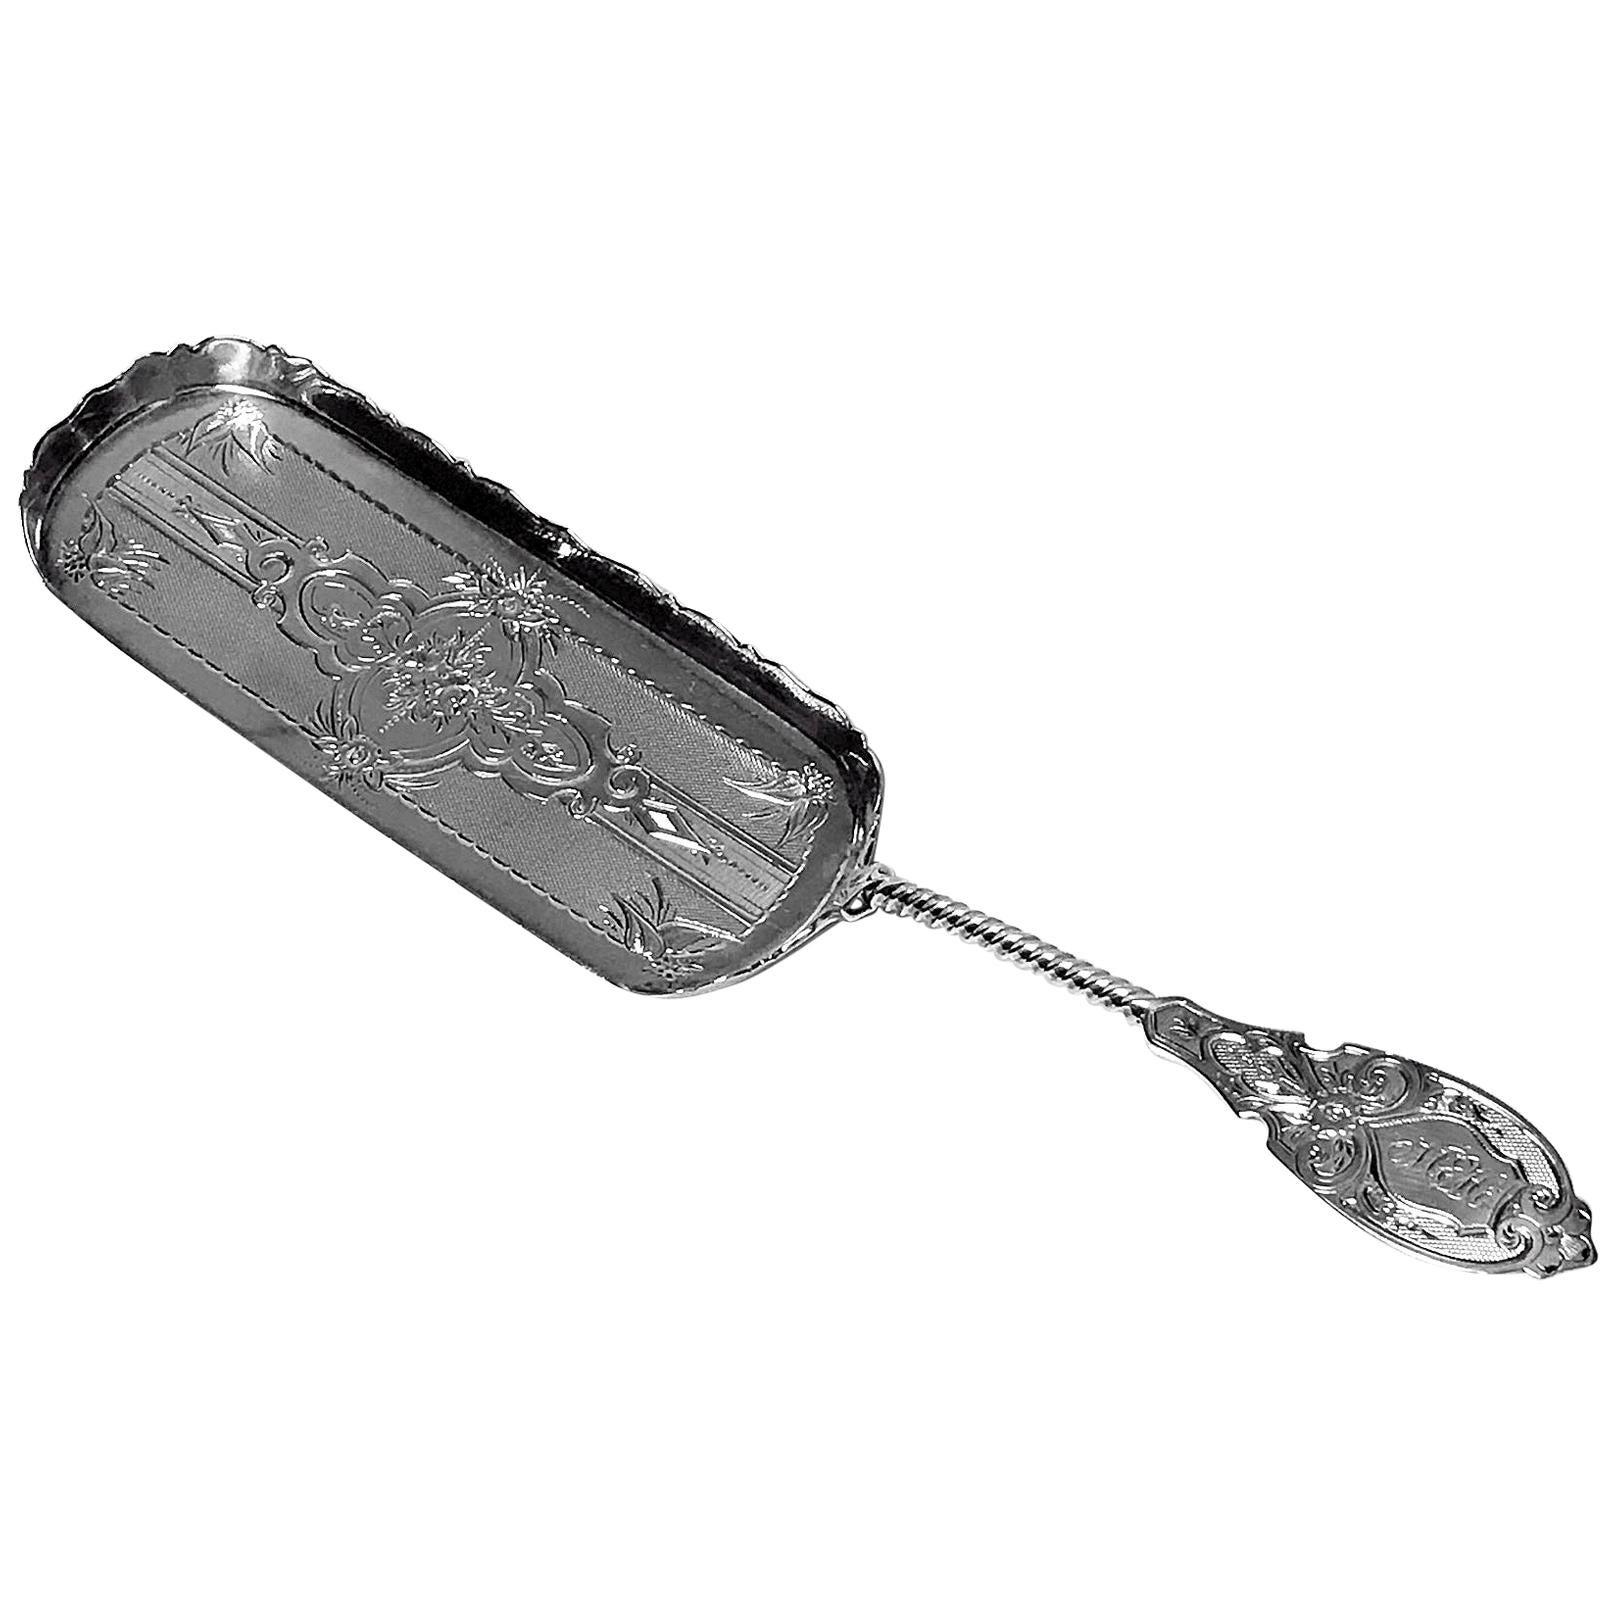 William Gale American Sterling Silver Crumb Scoop Slice, circa 1860